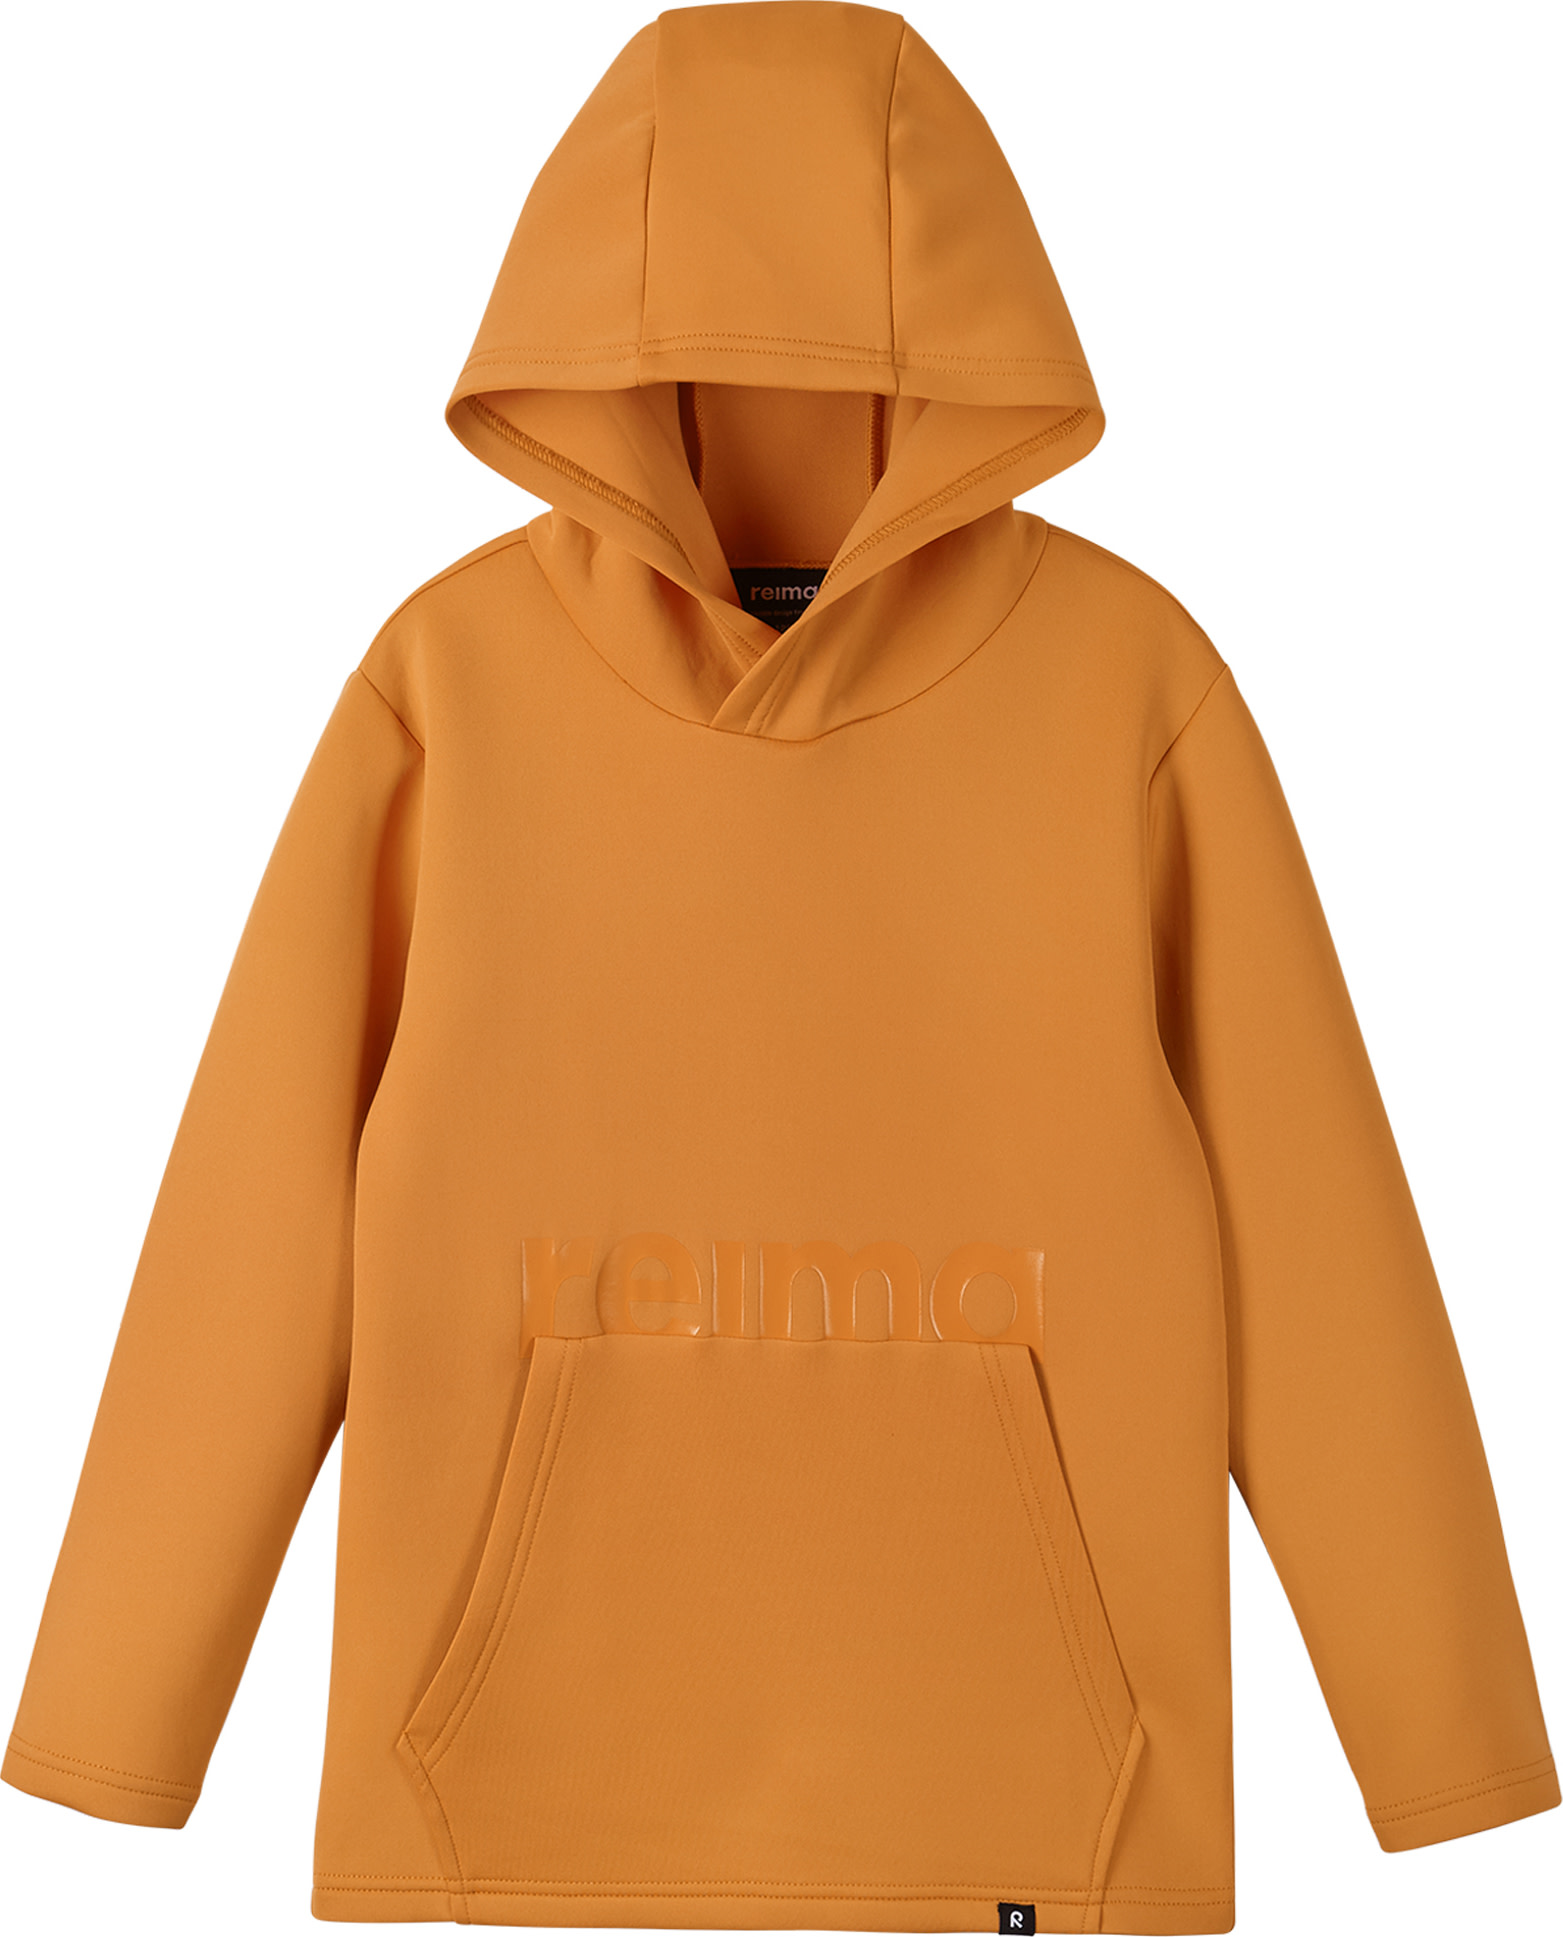 Reima Reima Kids' Sweater Toimekas Dark Orange 116 cm, Dark Orange 2840